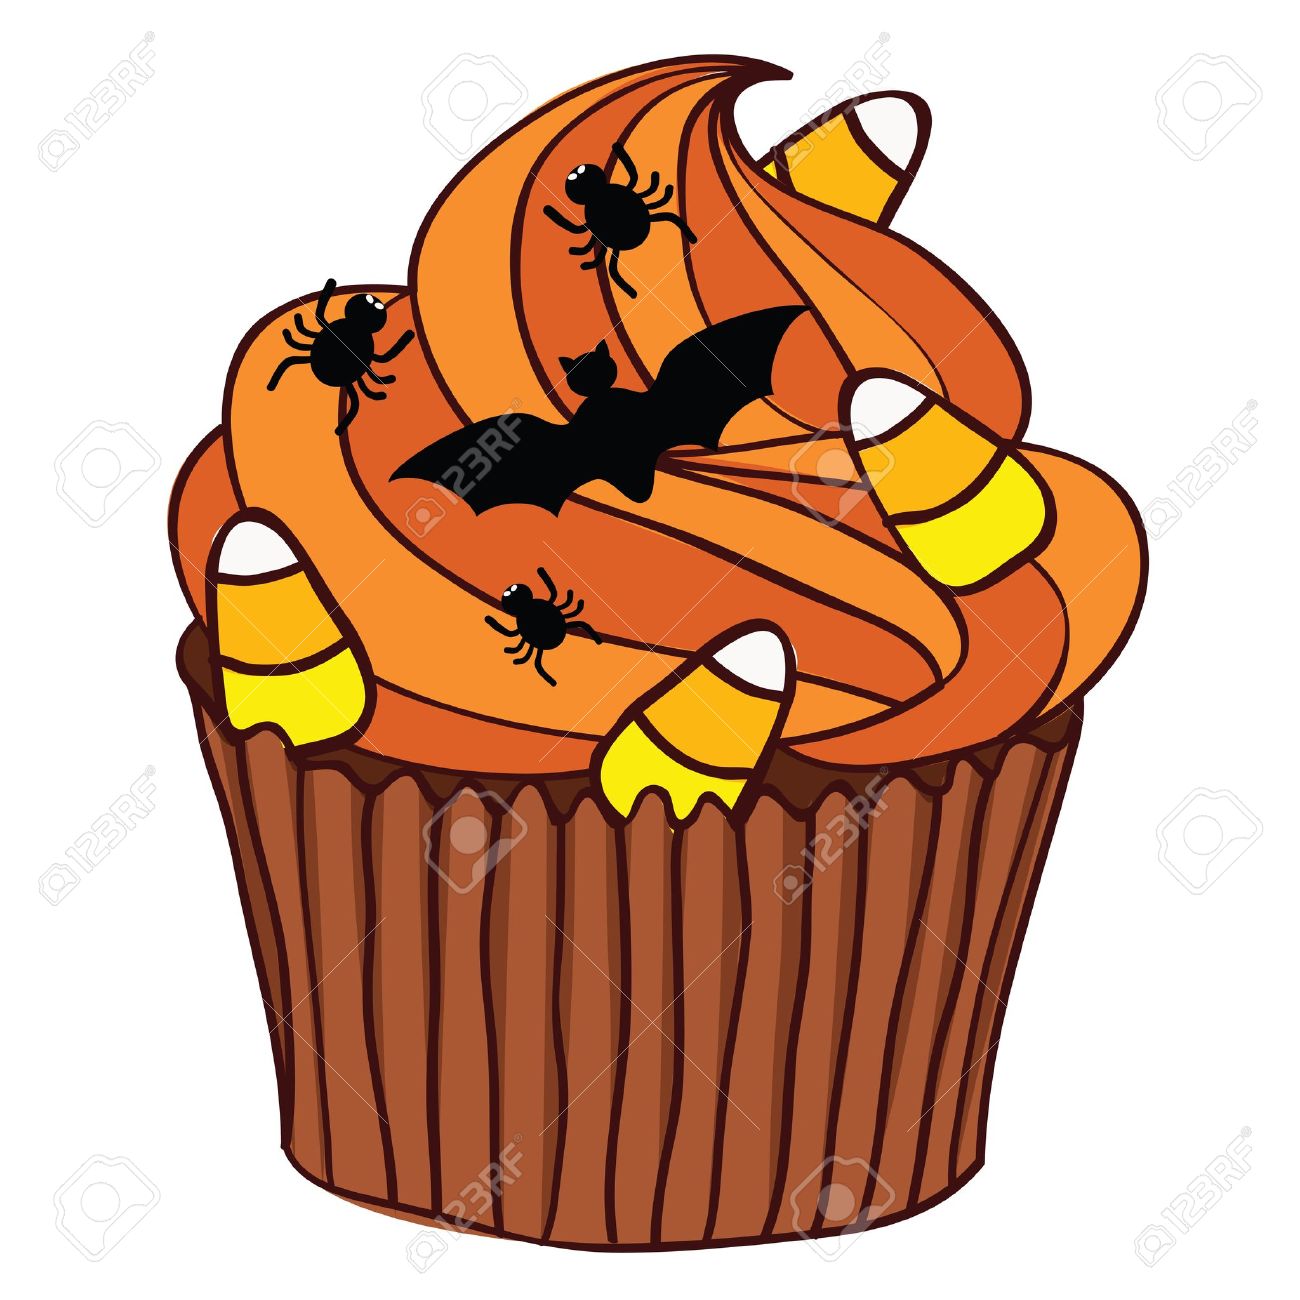 Halloween birthday cake clip art